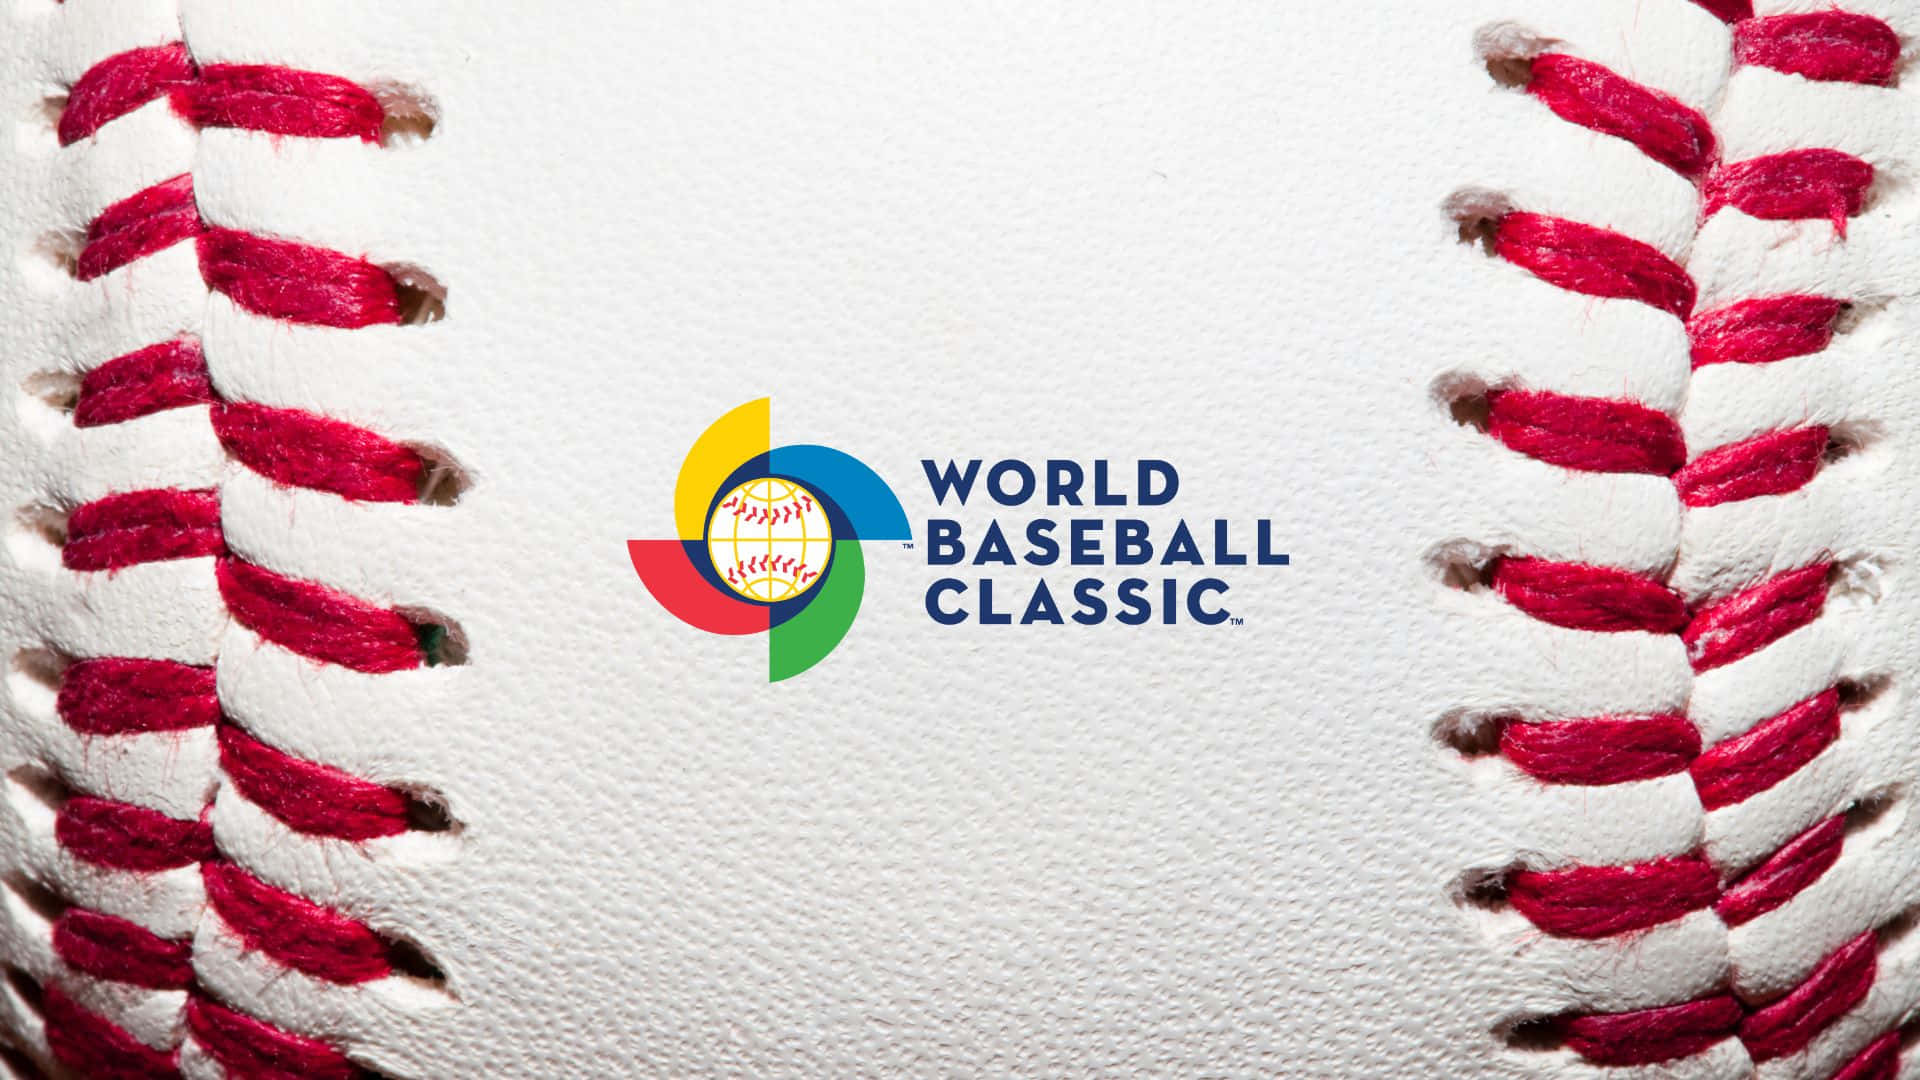 100+] World Baseball Classic Wallpapers